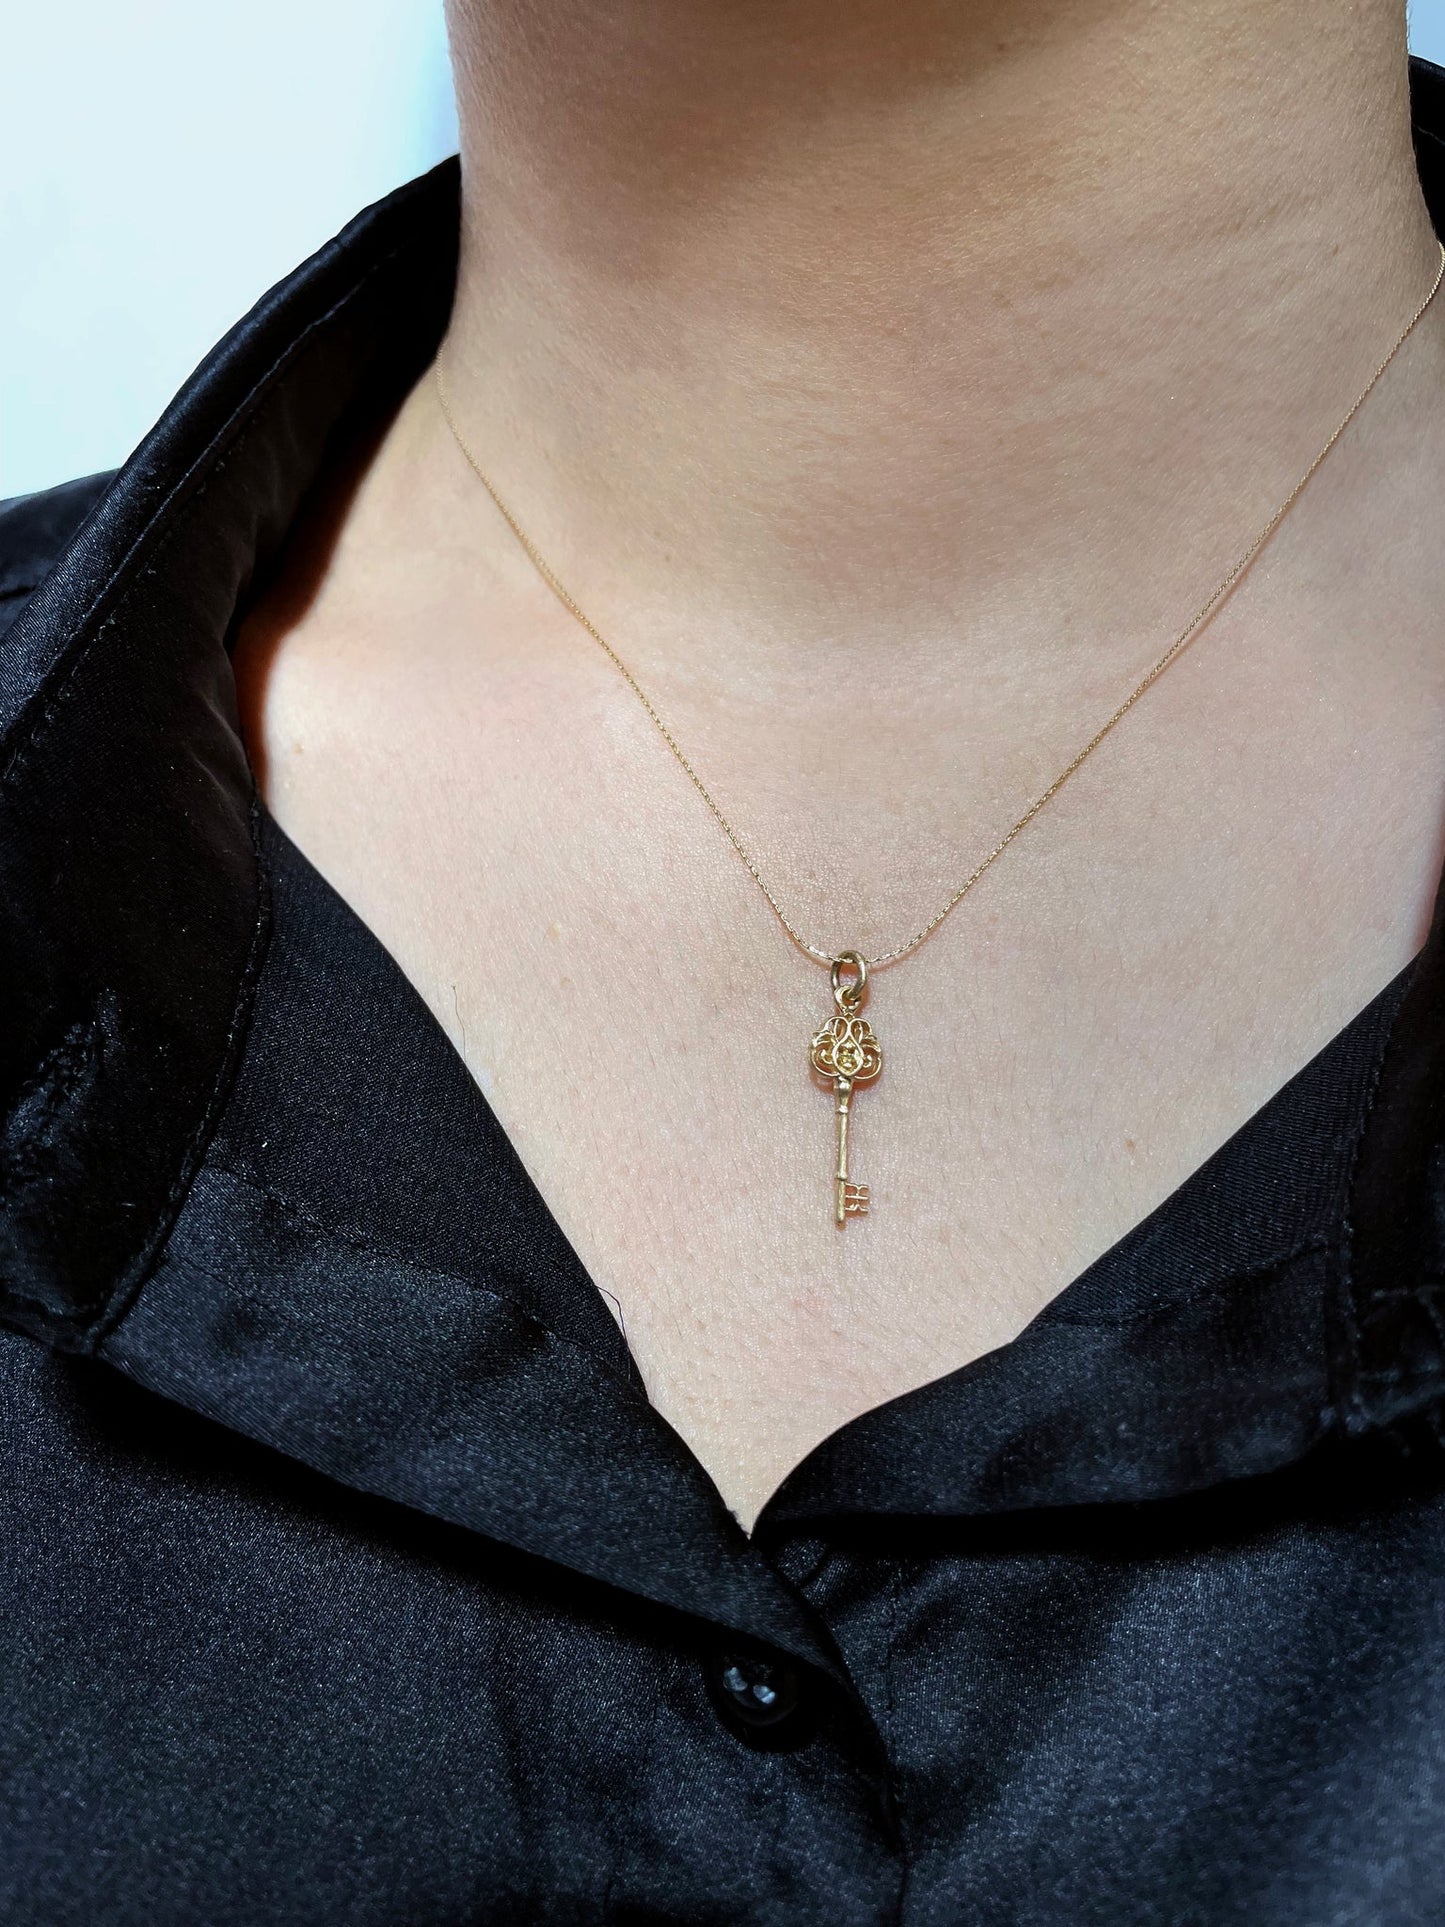 Magical Gold thread - necklace - 18 Karat Gold